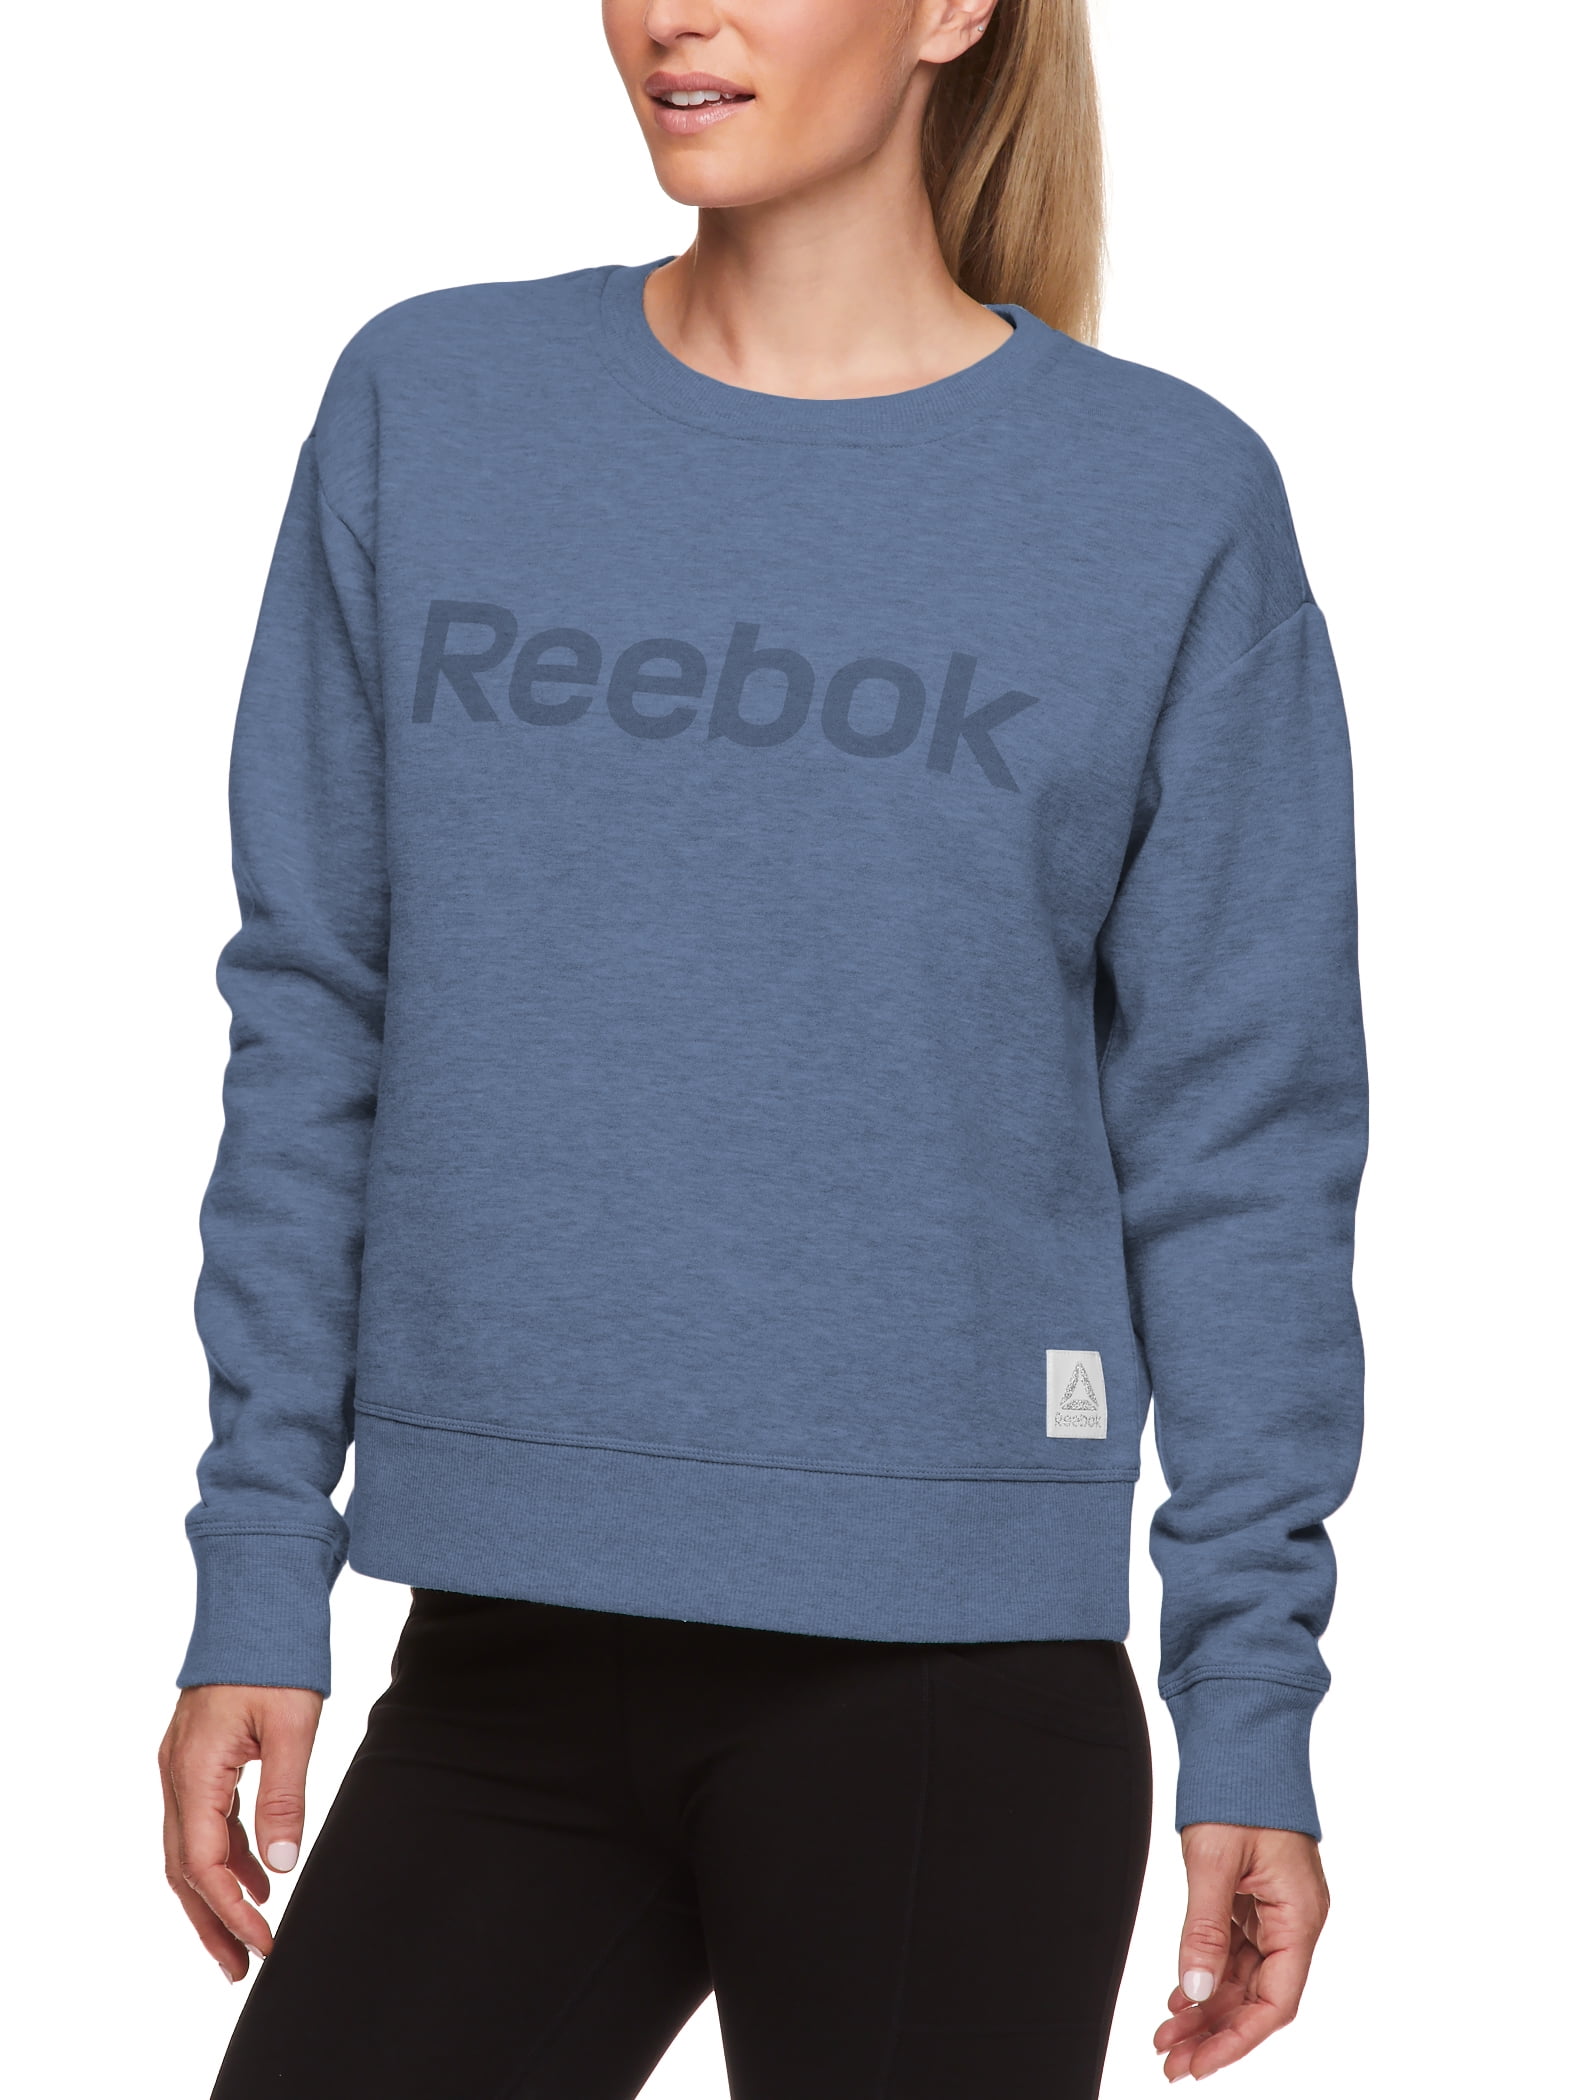 Fondsen Evolueren Margaret Mitchell Reebok Womens Cozy Crewneck Sweatshirt with Graphic - Walmart.com